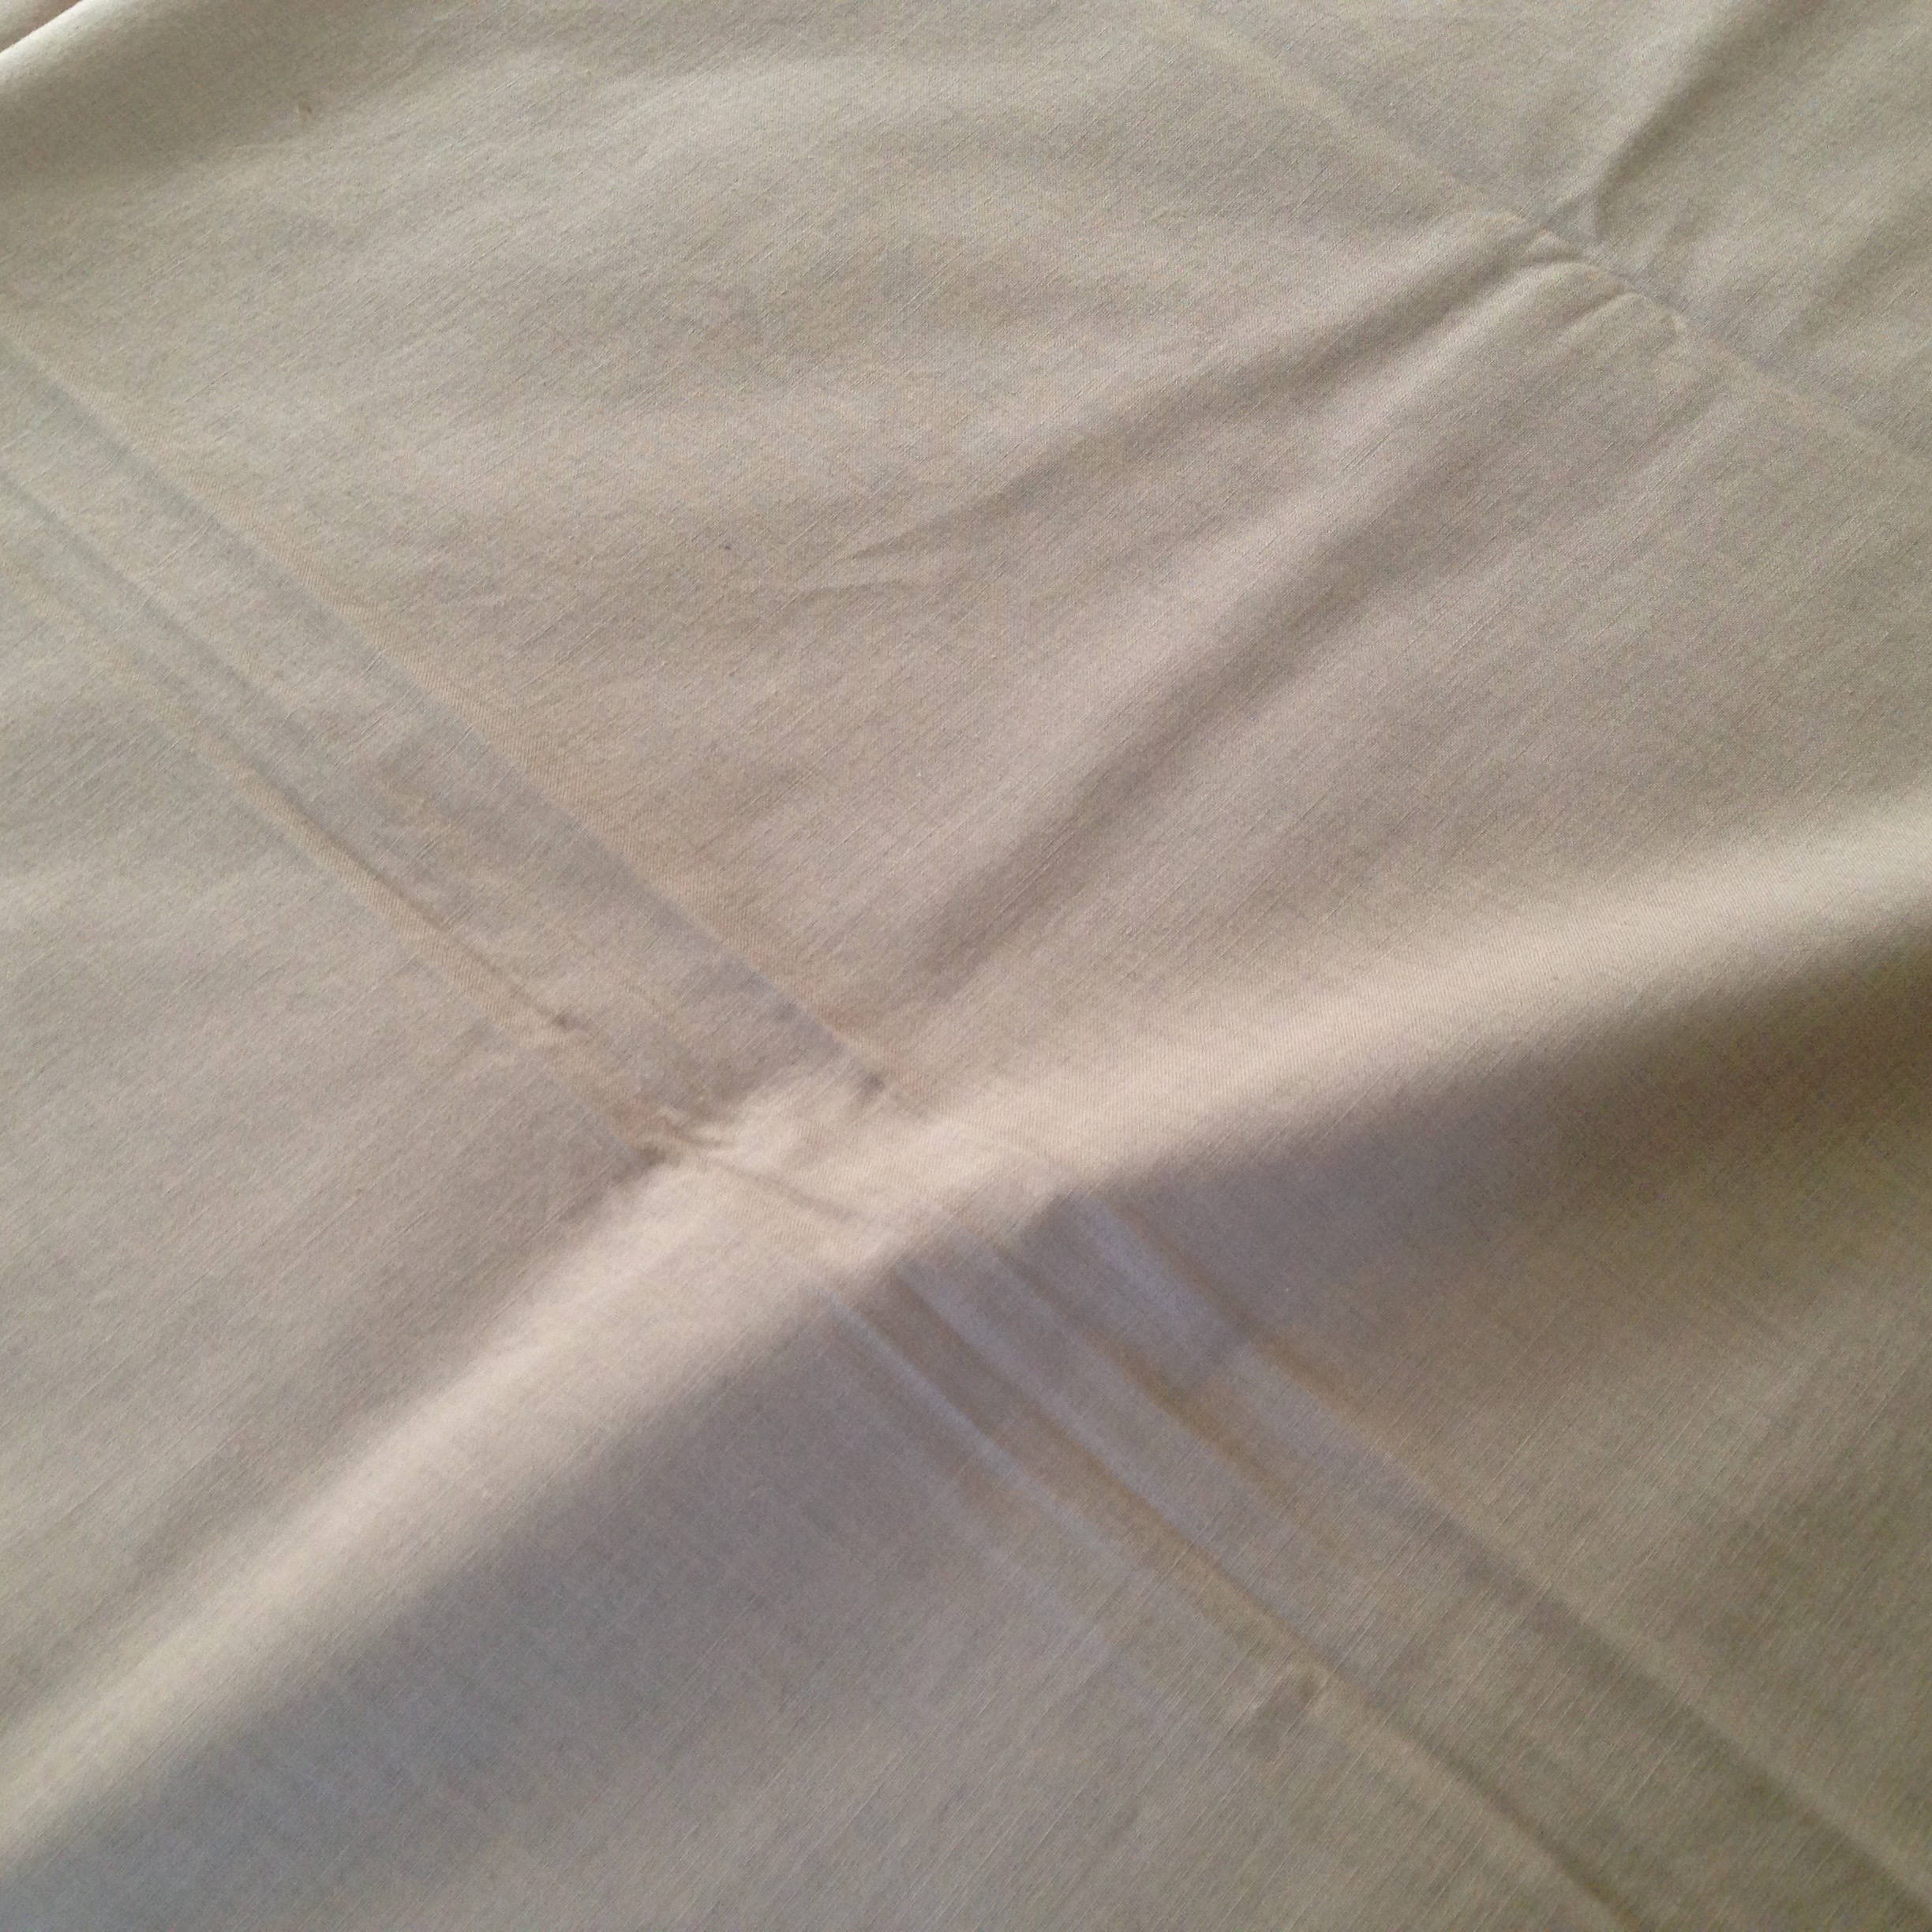 Beige color cotton wrinkle resistant 2 1/4 yards long 42 | Etsy